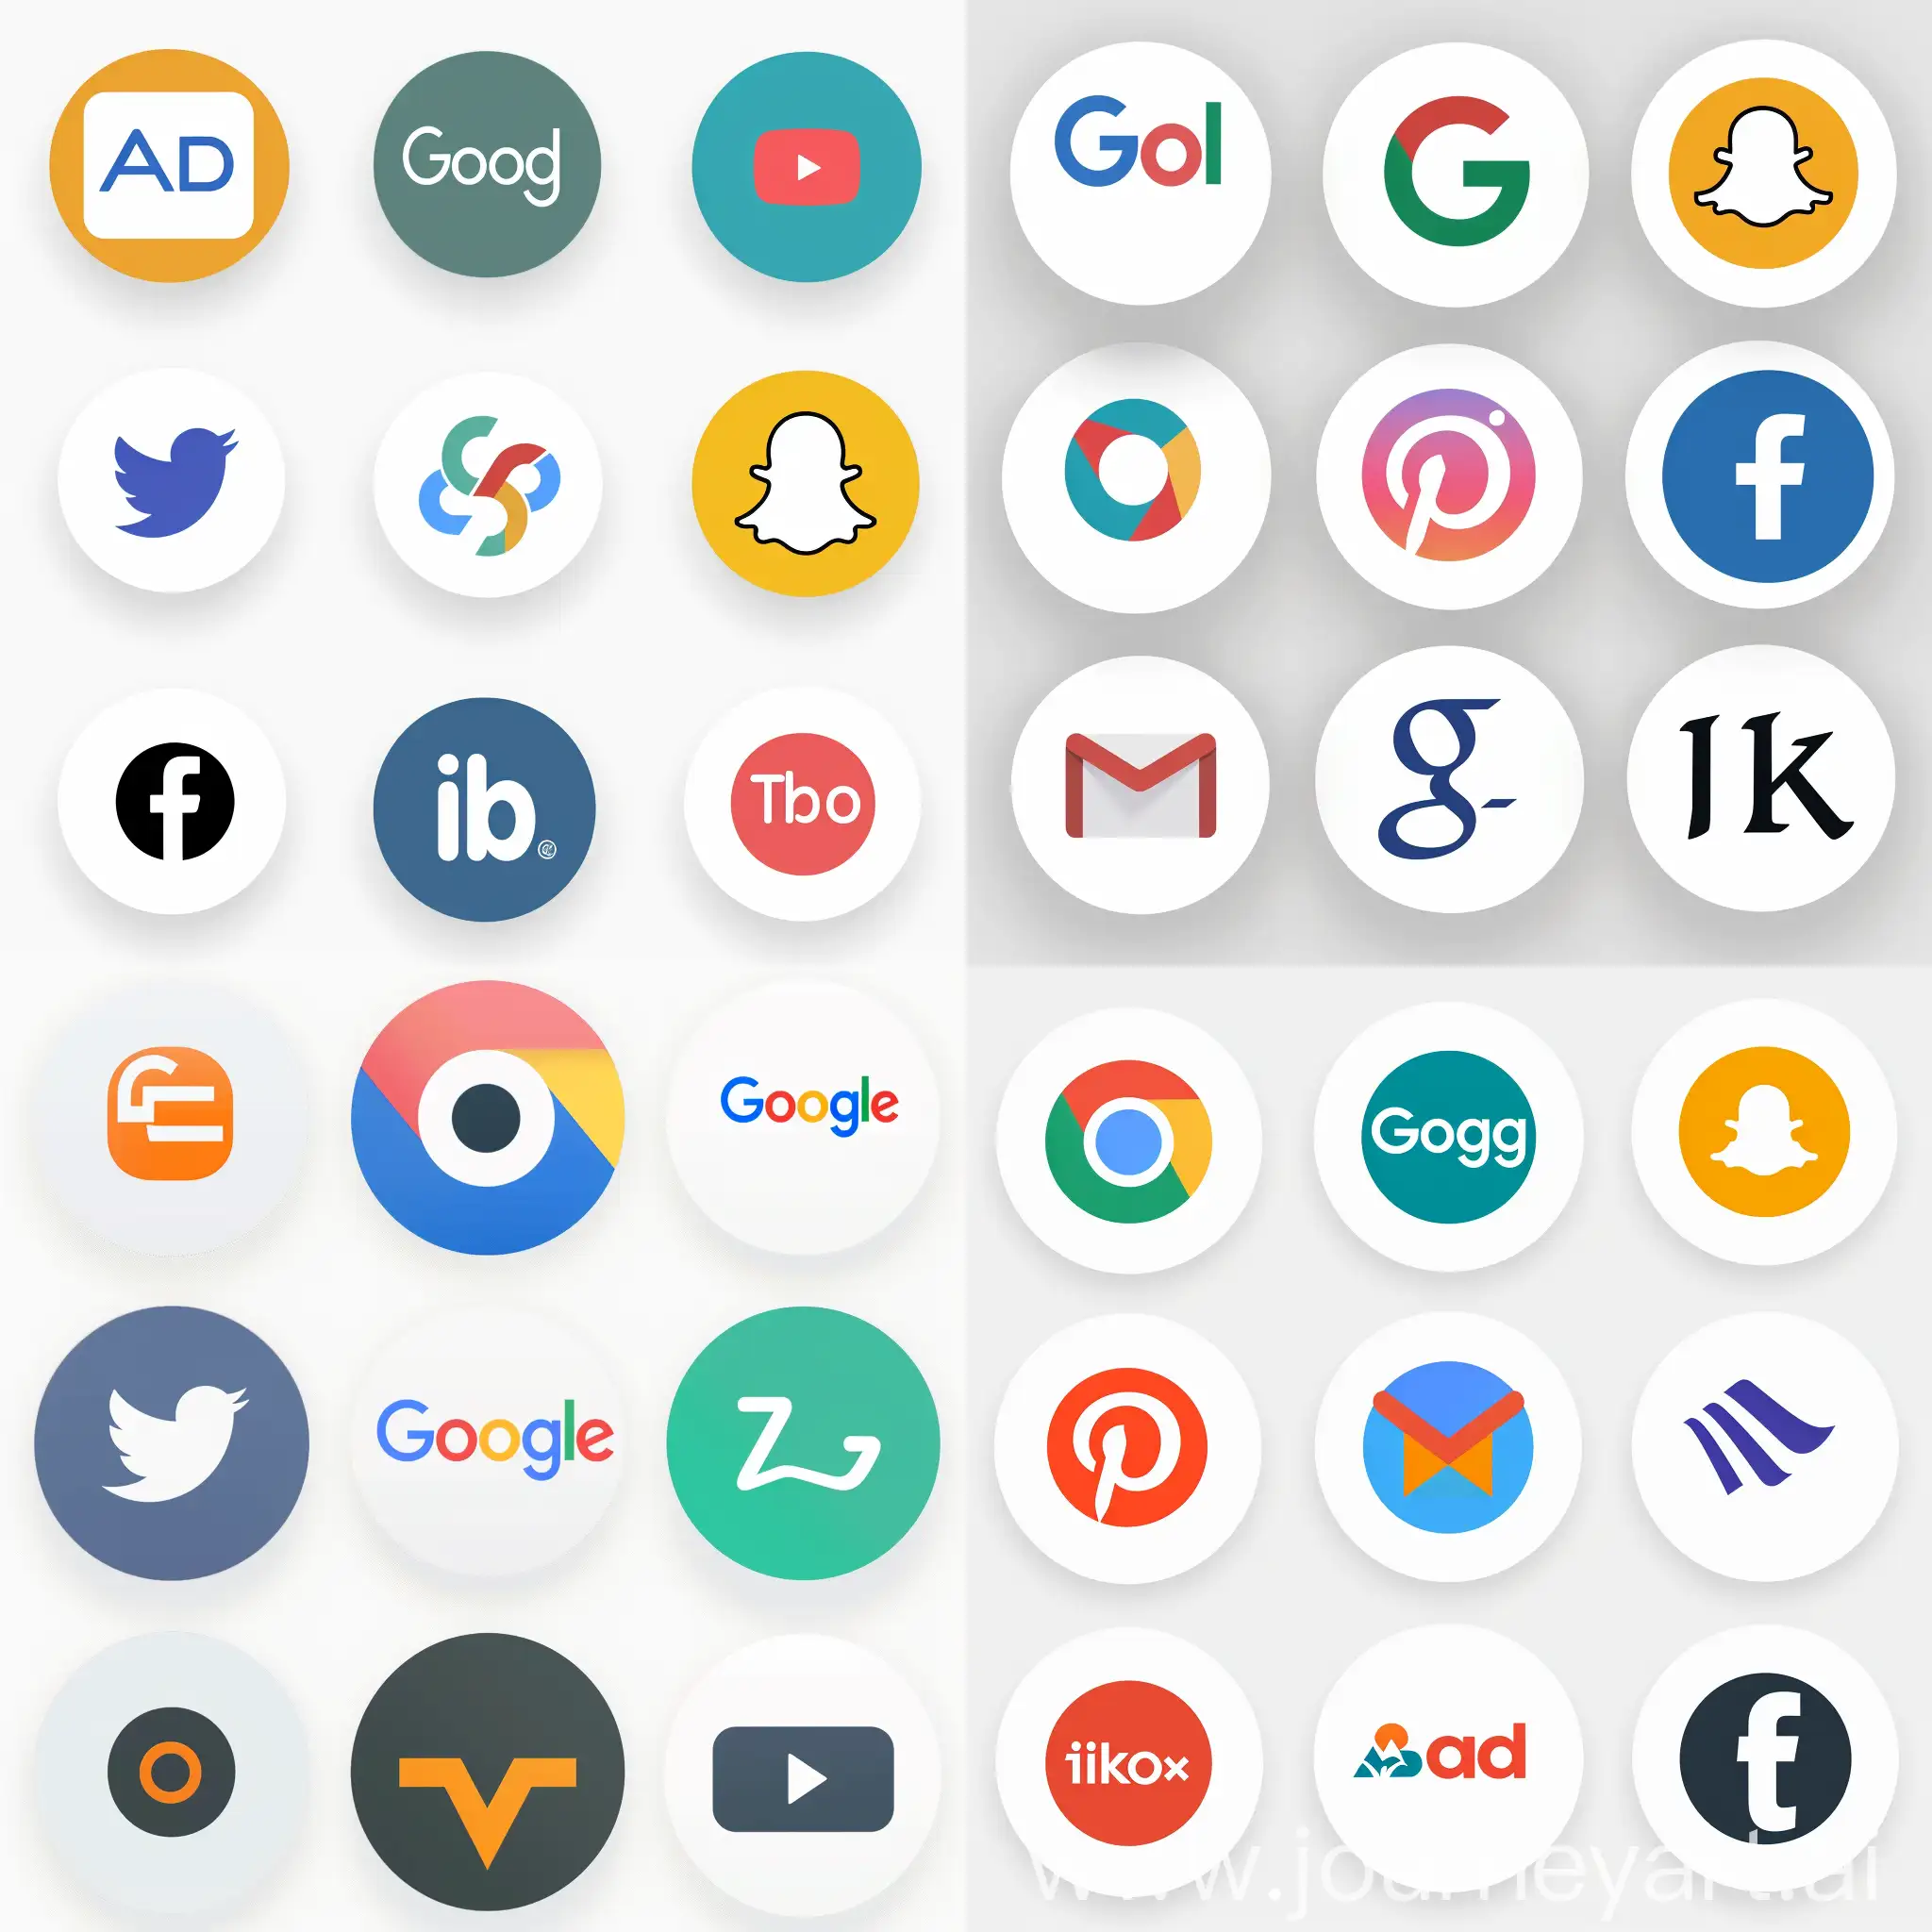 logos in circle from Google Ads, Meta, Instagram,tiktok, Google Analytics, 